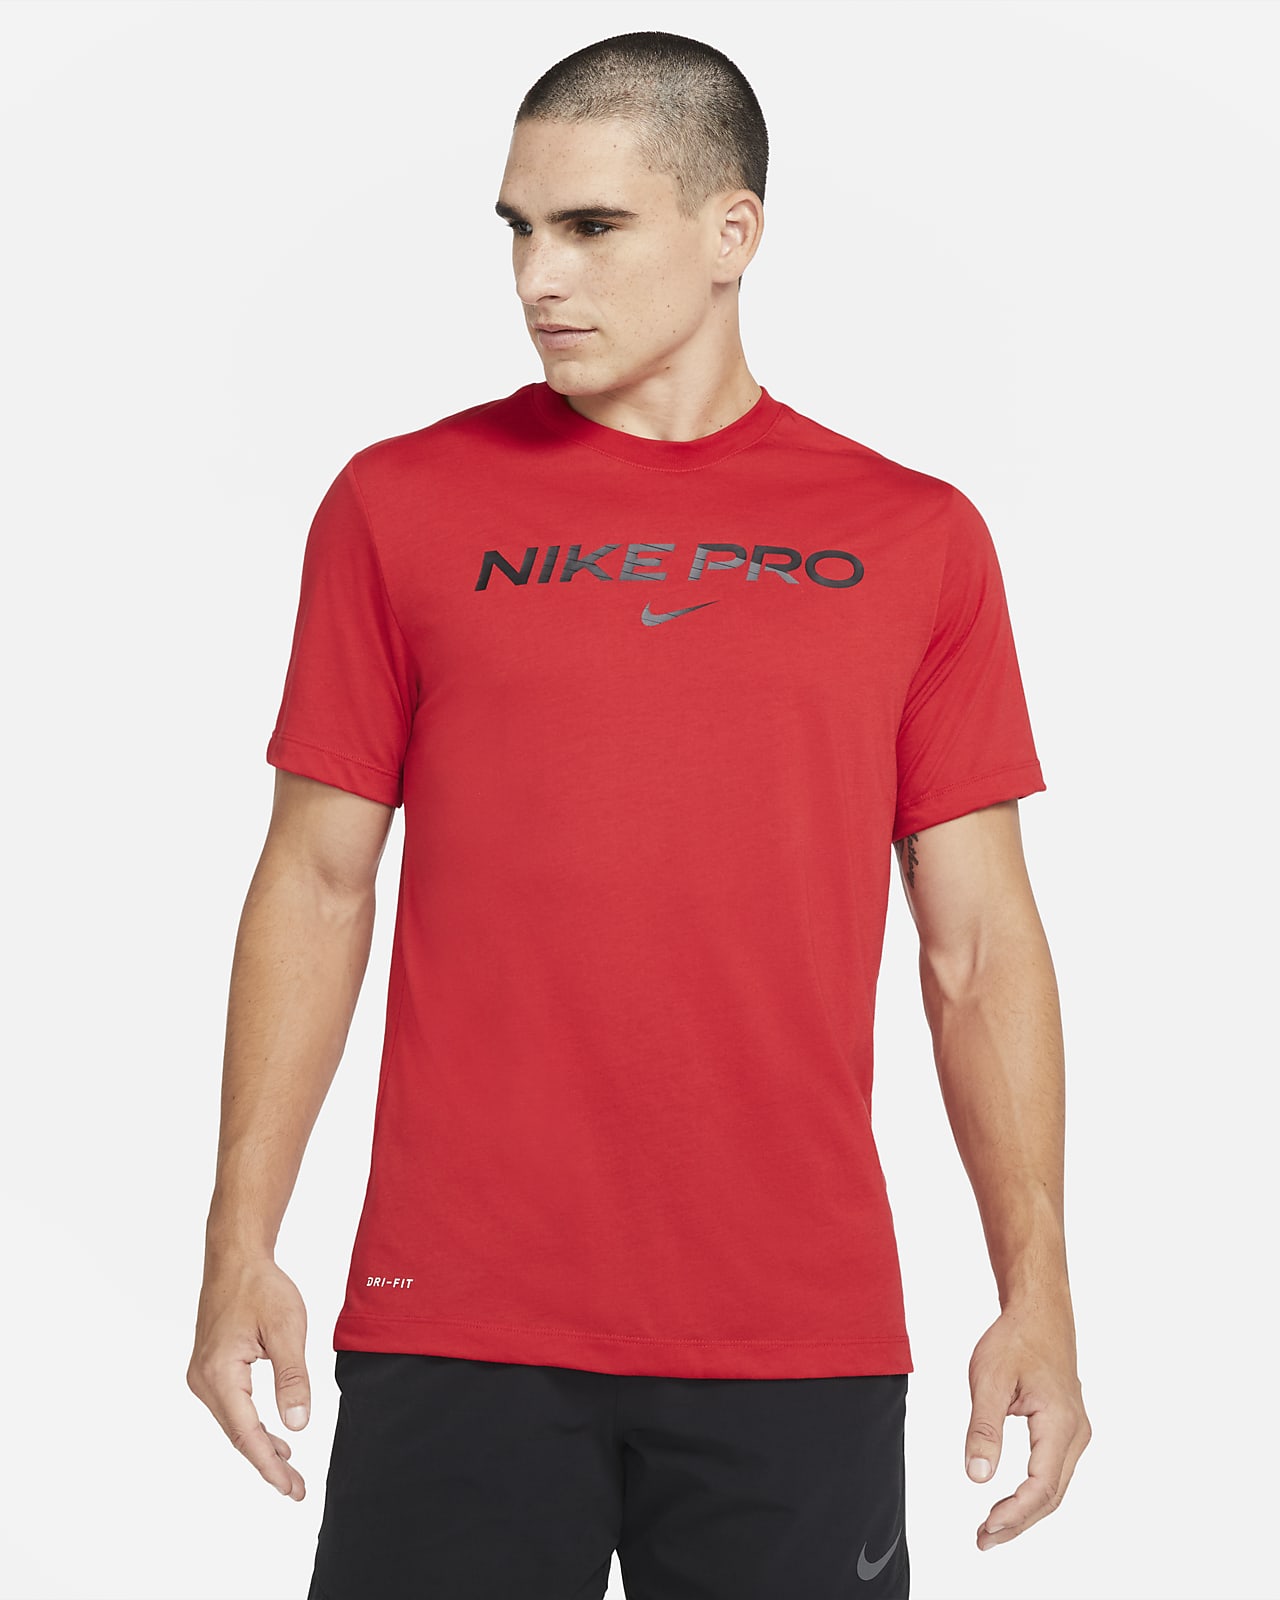 red nike pro shirt